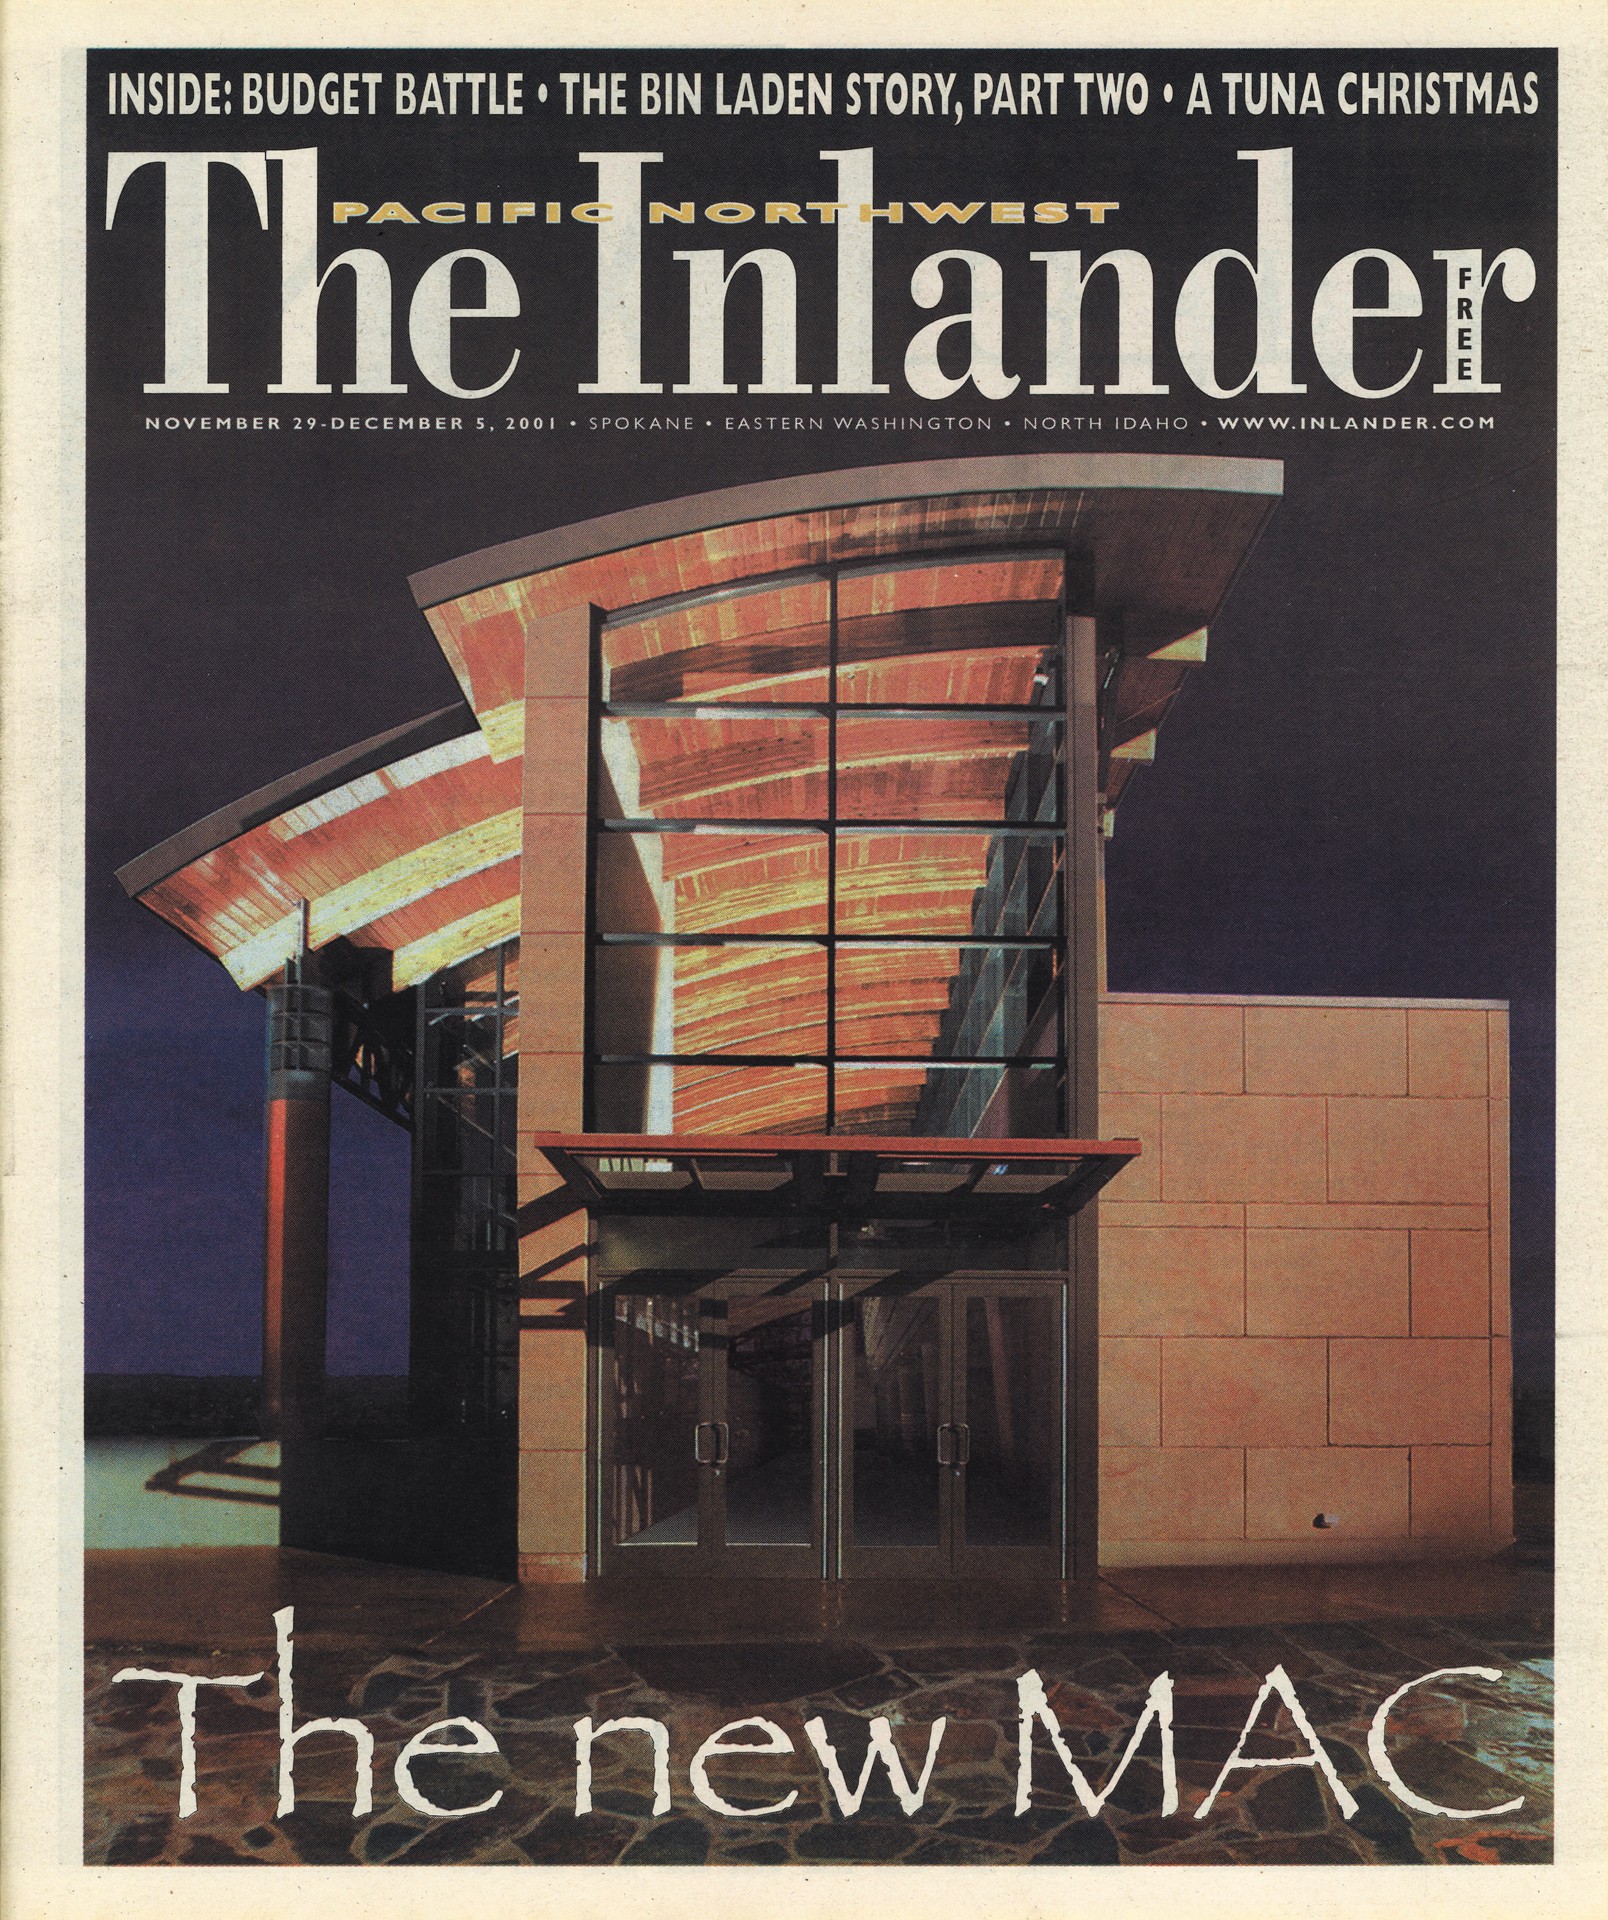 30 Years of Inlander: 2001-2002, Local News, Spokane